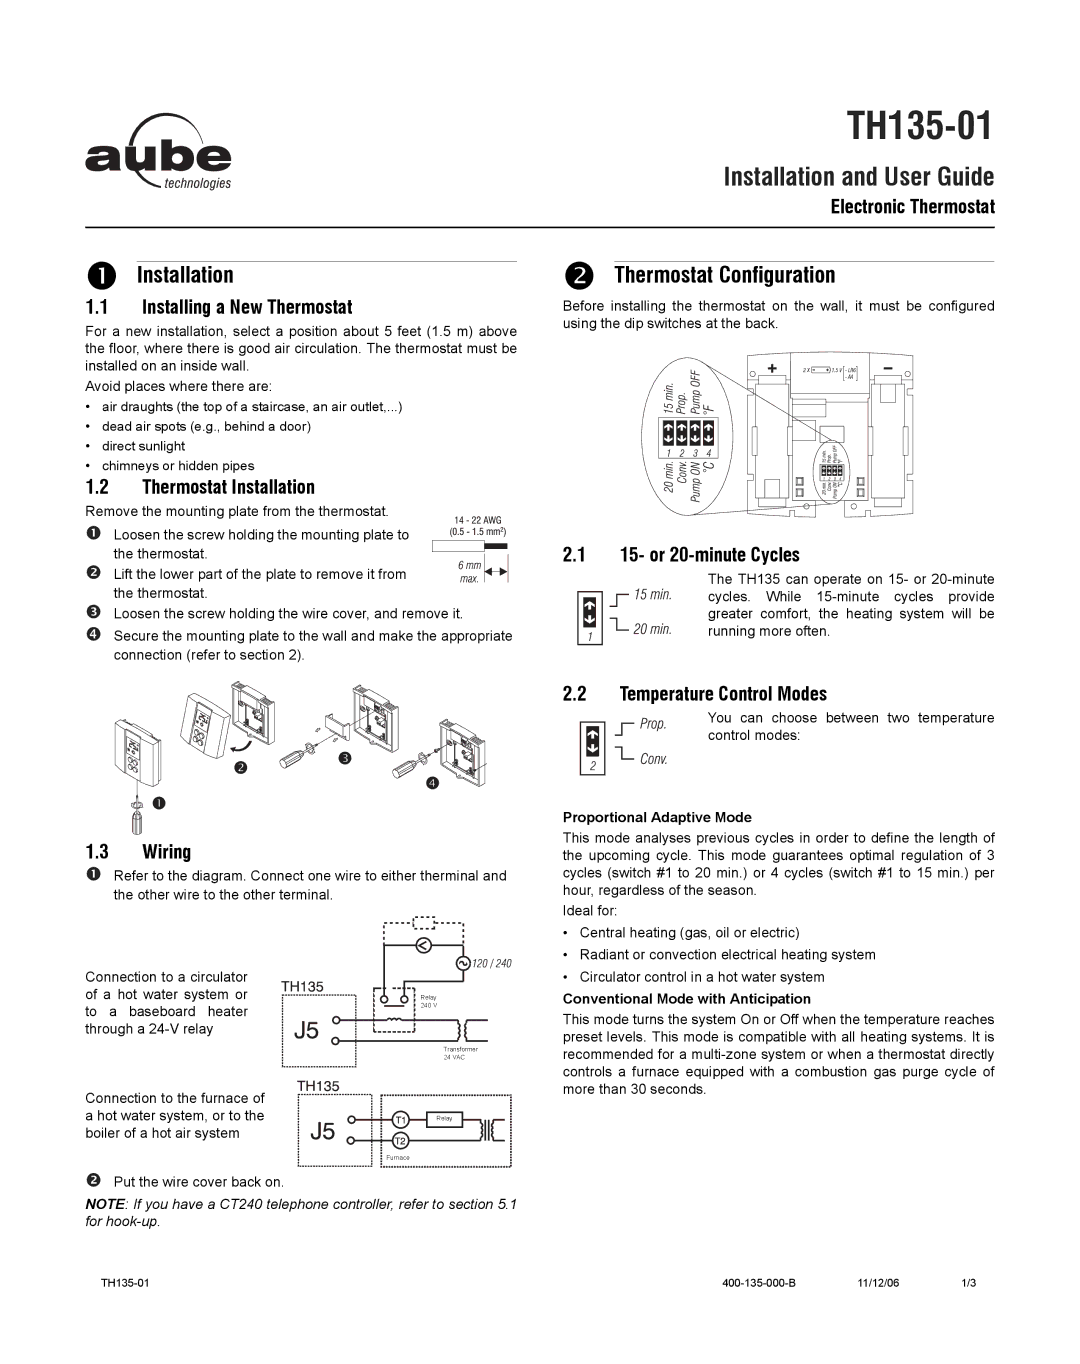 Aube Technologies TH135-01 manual Installation, Thermostat Configuration 